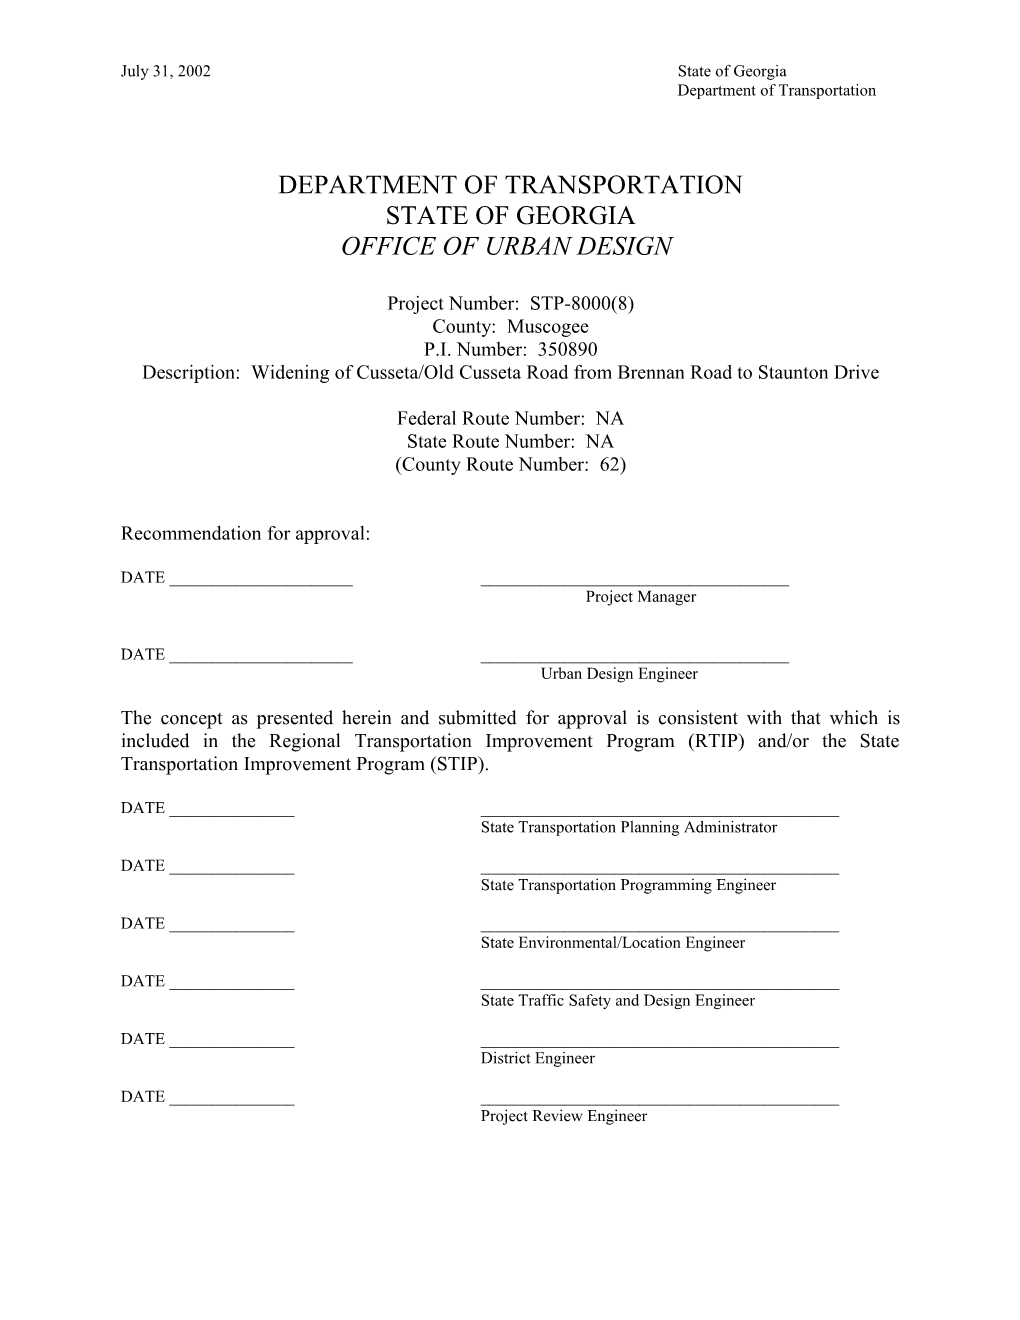 Department of Transportation s4